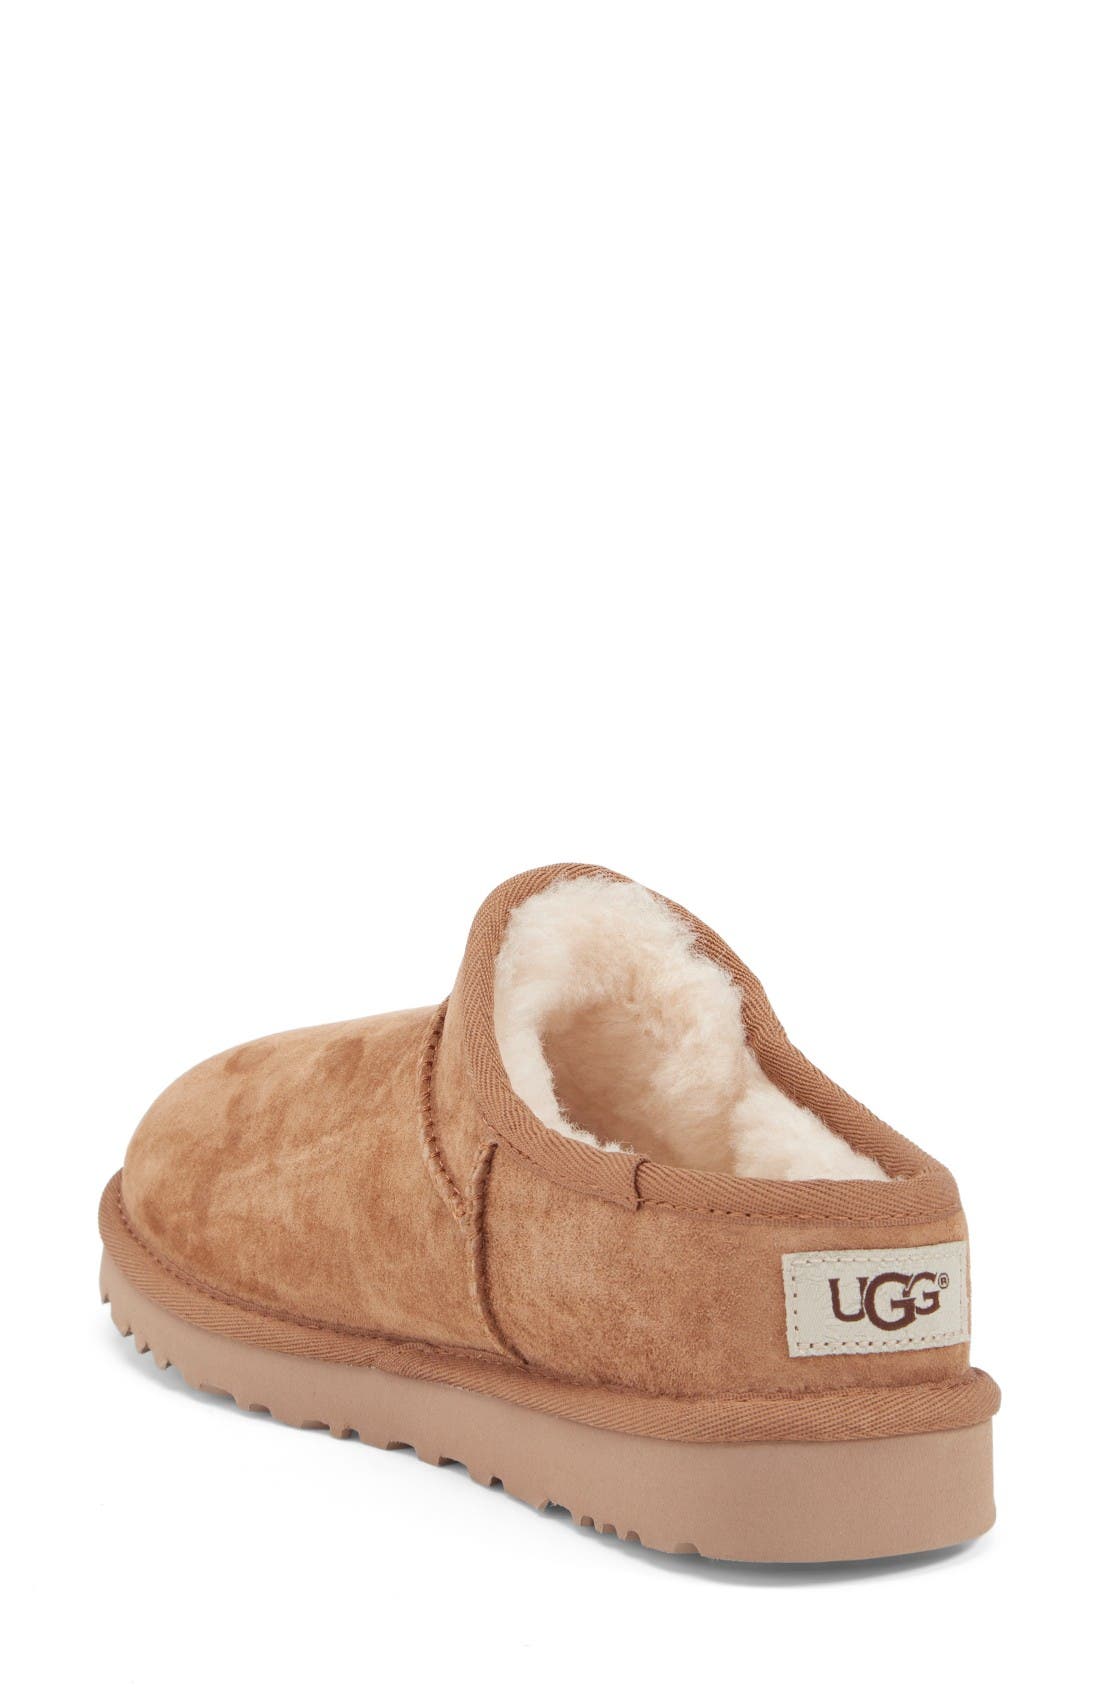 classic uggpure slipper